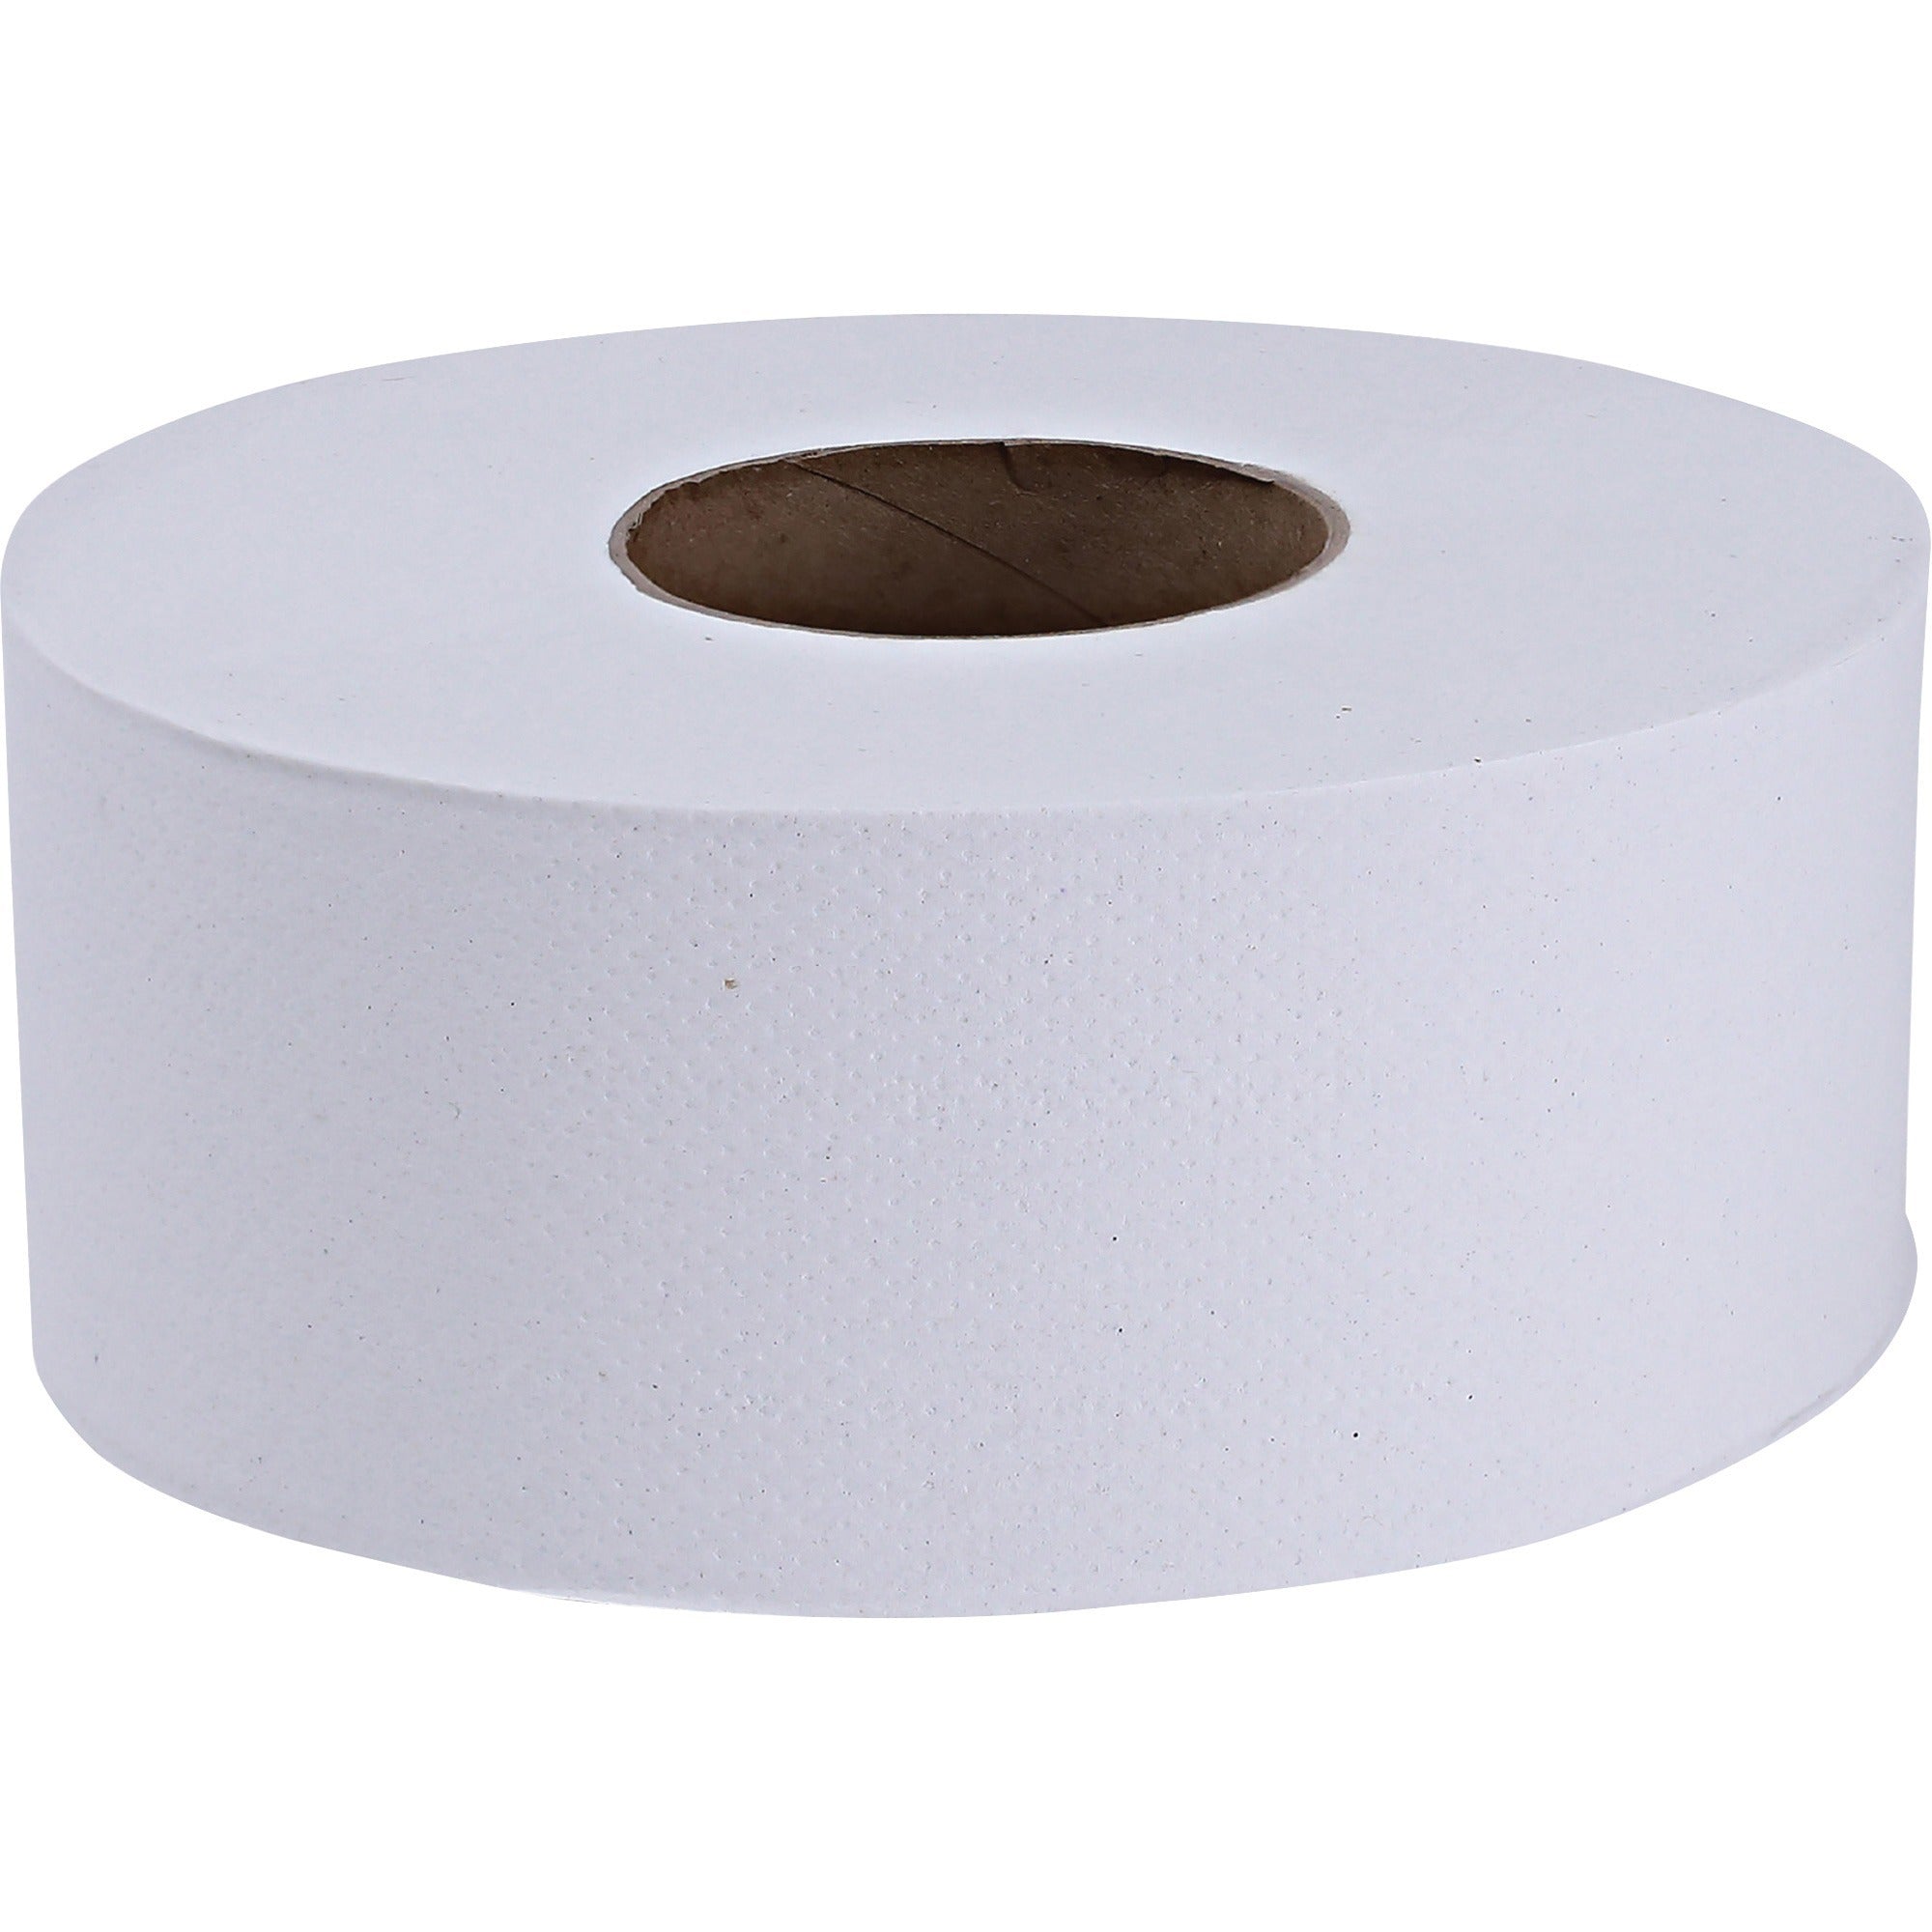 genuine-joe-jumbo-dispenser-roll-bath-tissue-2-ply-350-x-1000-ft-9-roll-diameter-330-core-white-nonperforated-fragrance-free-embossed-unscented-for-restroom-washroom-toilet-8-carton_gjo2506008 - 4